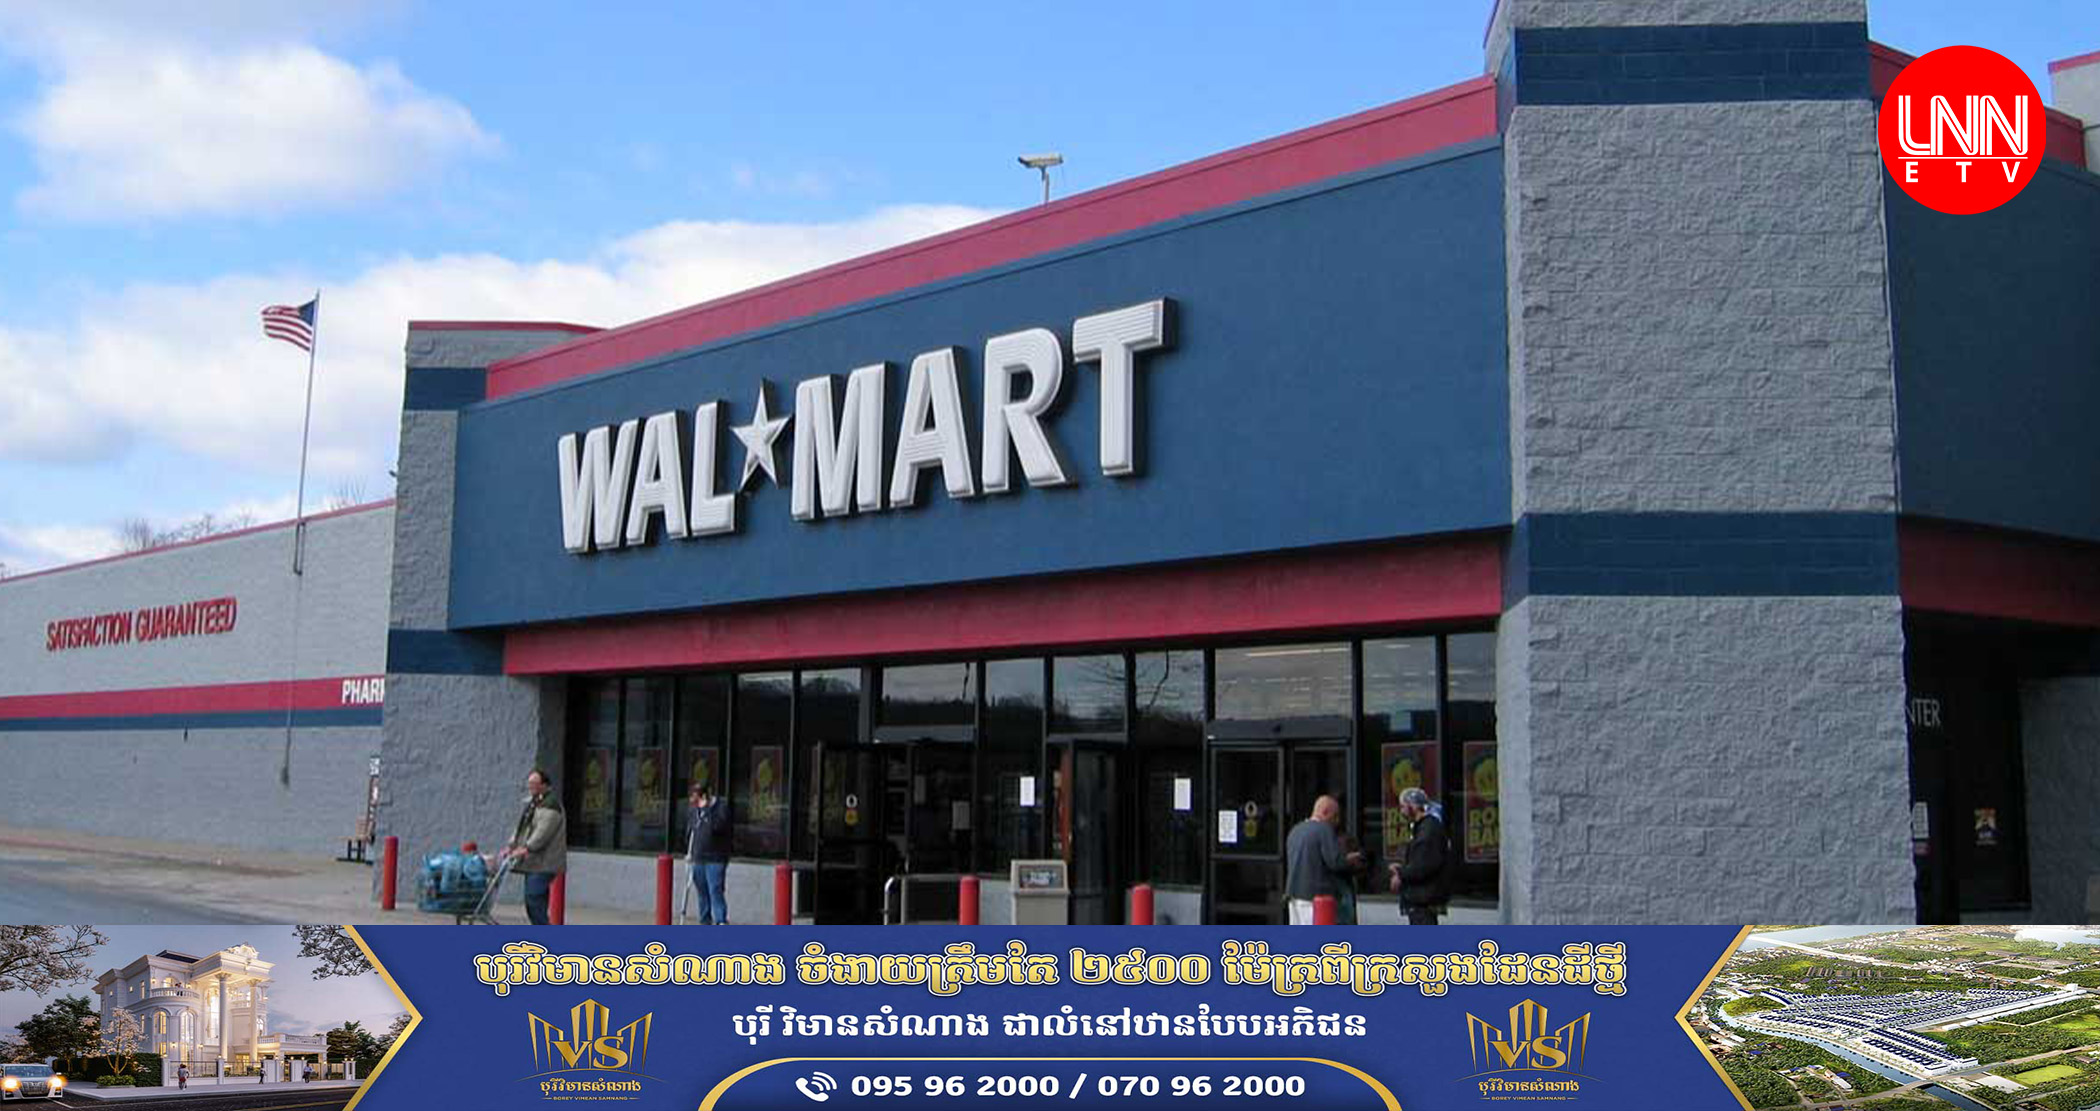 Walmart នឹងវិនិយោគជិត 1.5 ពាន់លានដុល្លារនៅម៉ិកស៊ិក និងអាមេរិកកណ្តាលក្នុងឆ្នាំ 2023